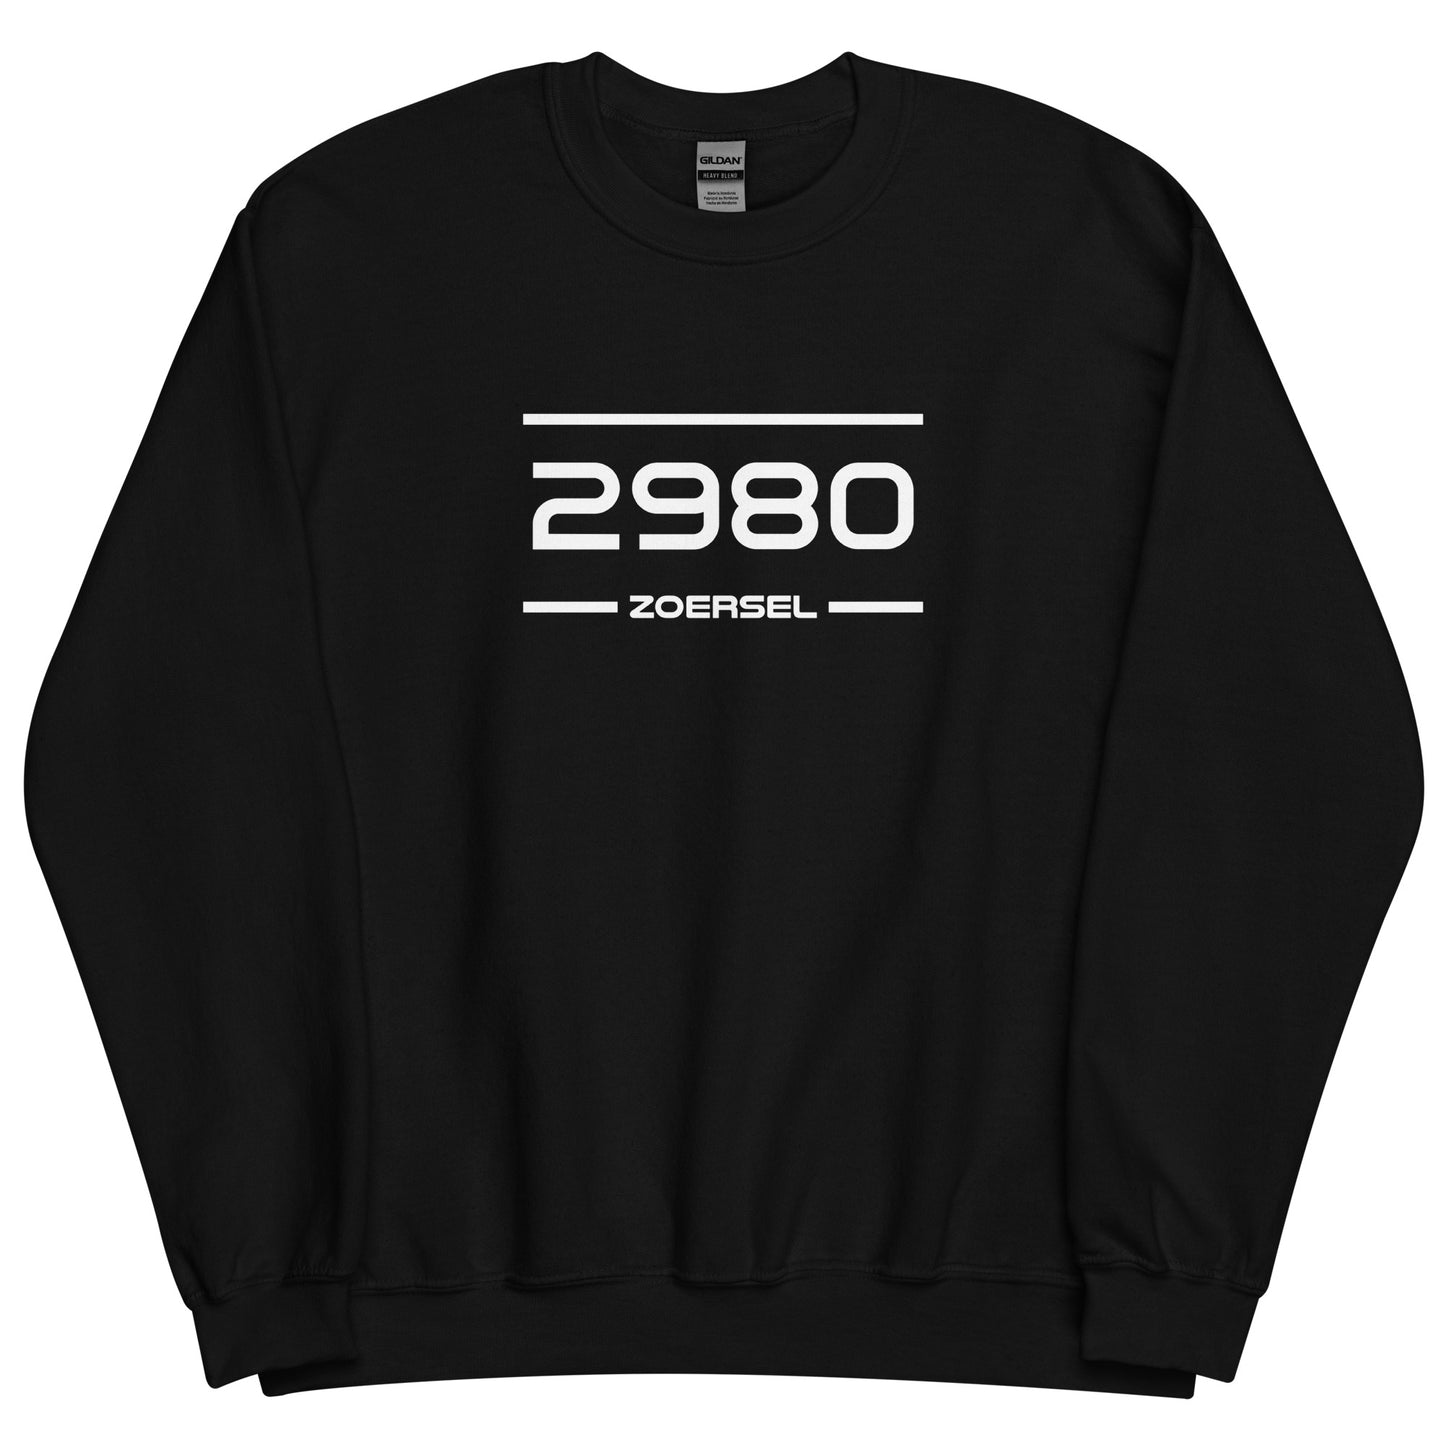 Sweater - 2980 - Zoersel (M/V)